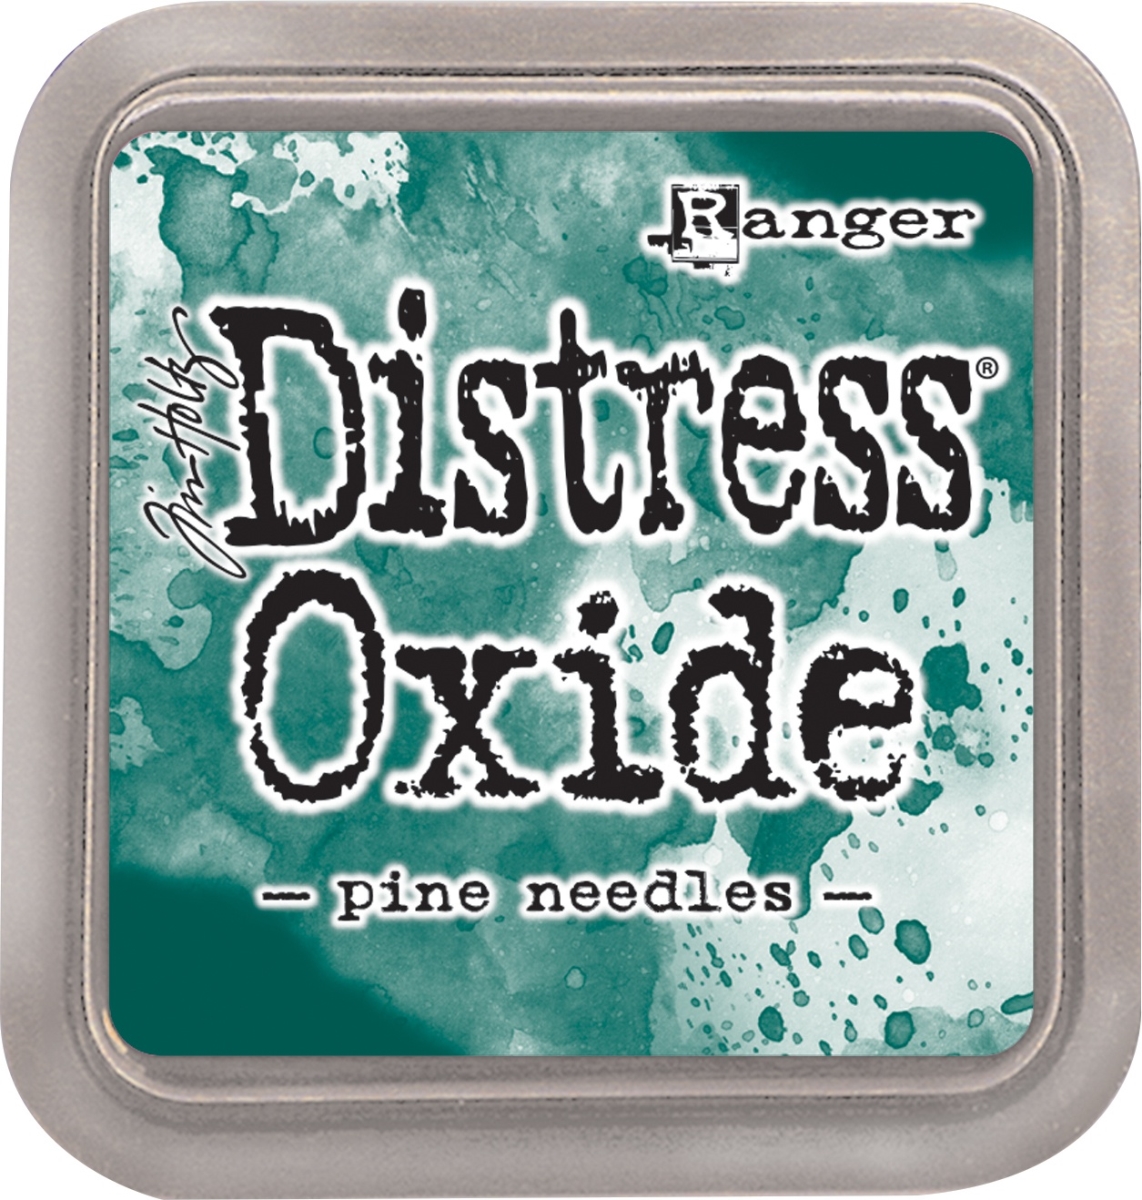 Tdo-56133 Tim Holtz Distress Oxides Ink Pad, Pine Needles